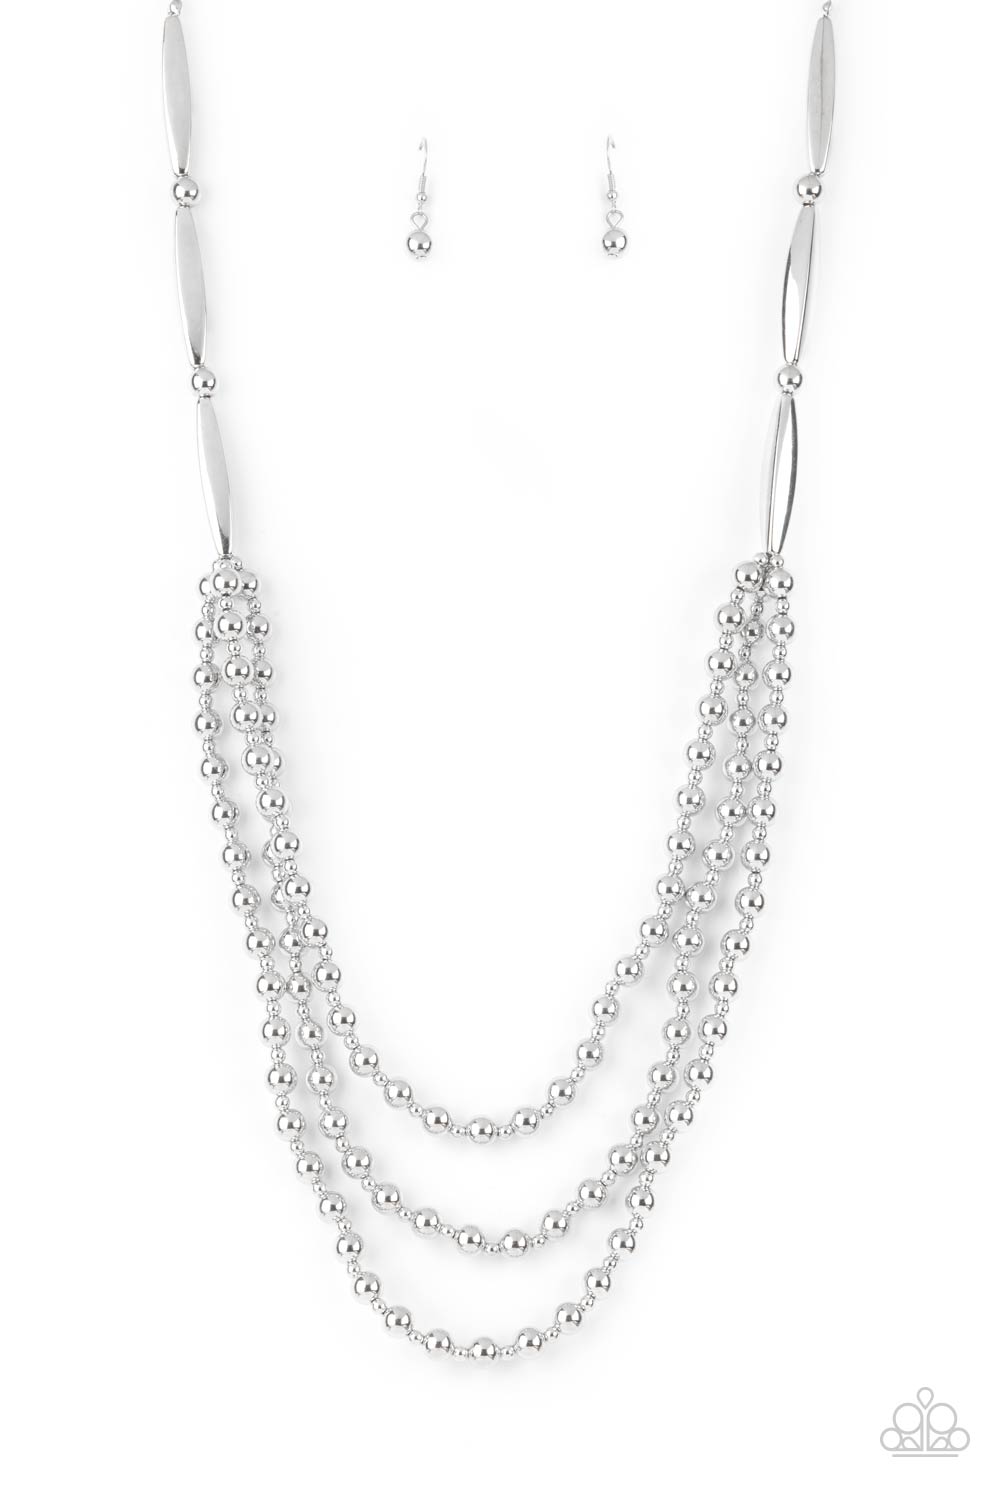 Beaded Beacon - silver - Paparazzi necklace